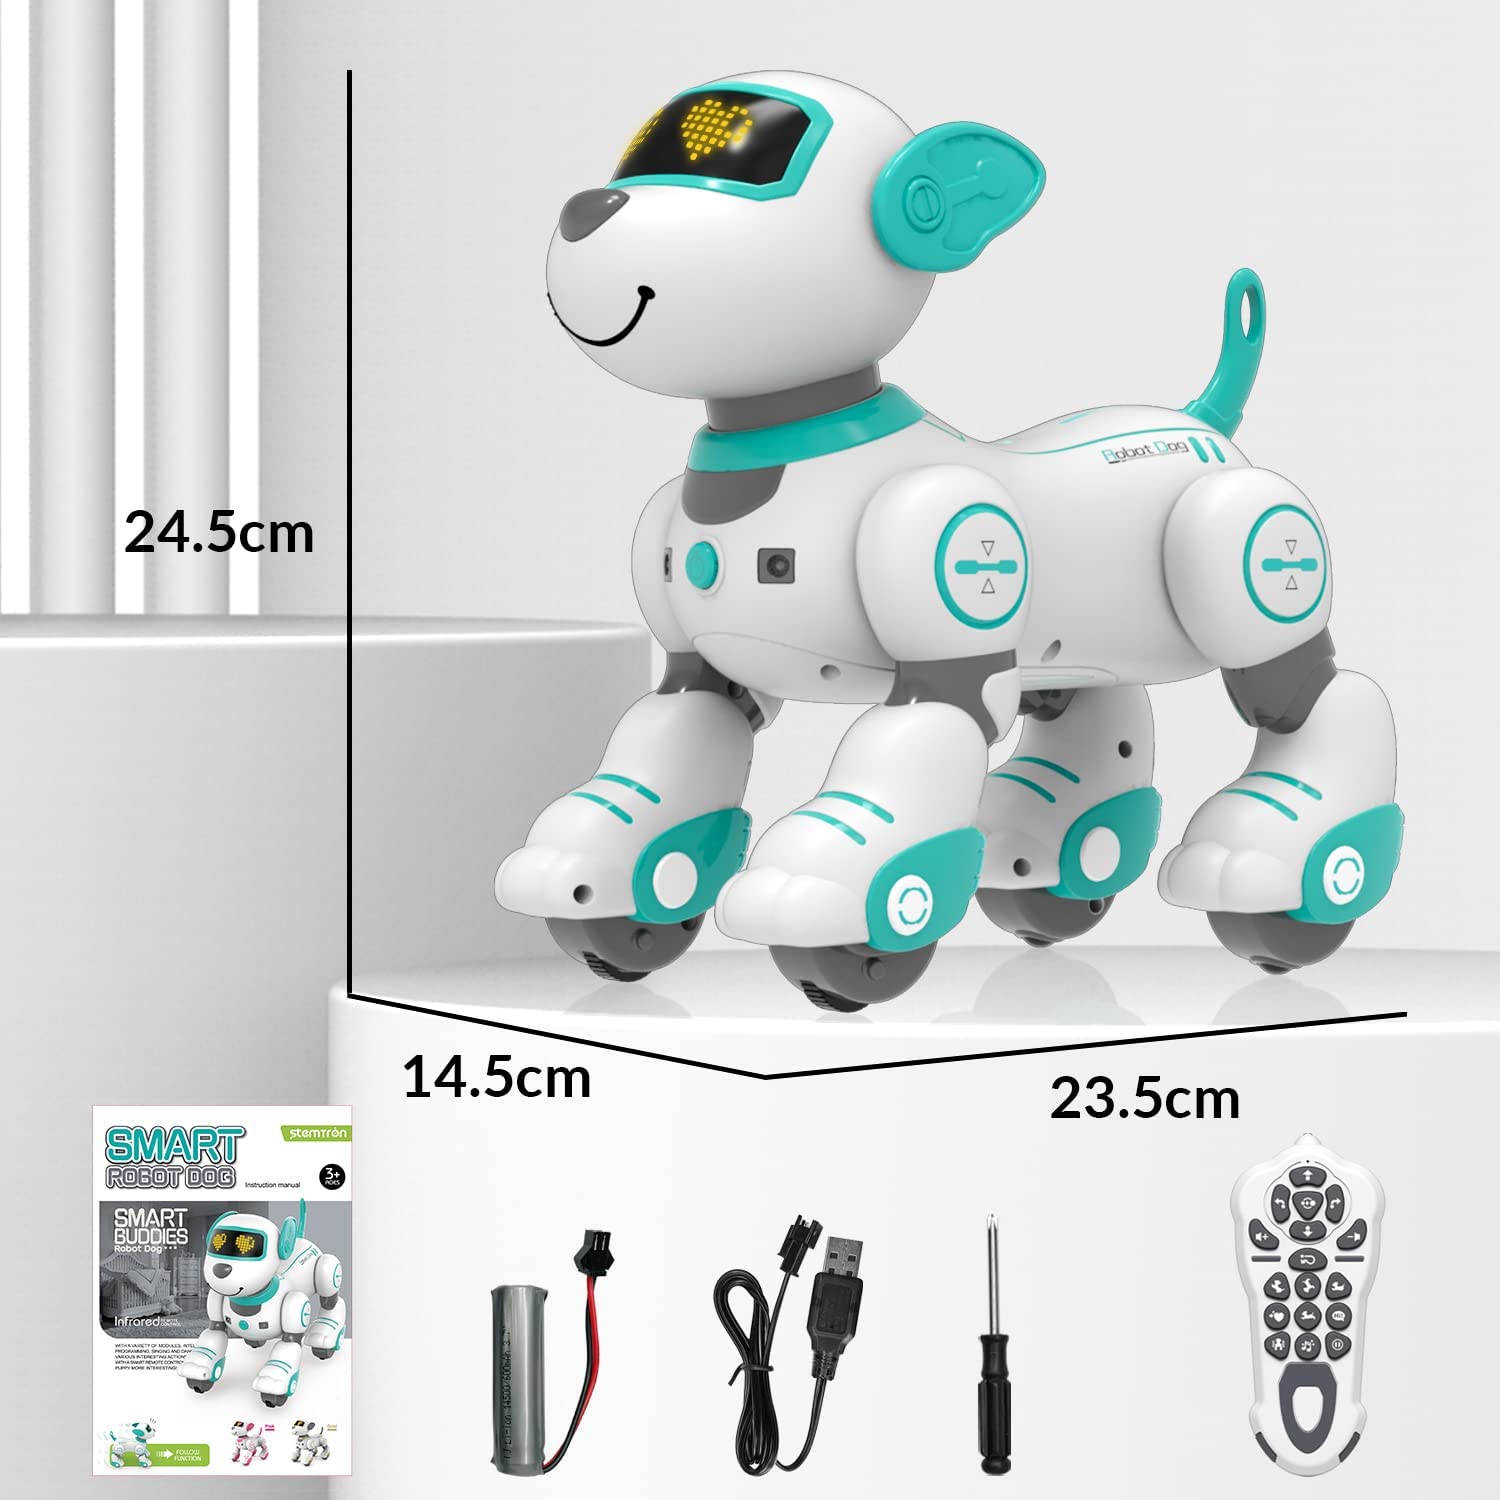  VATOS 2PCS RC Robot Toys for Kids, Rechargeable Remote